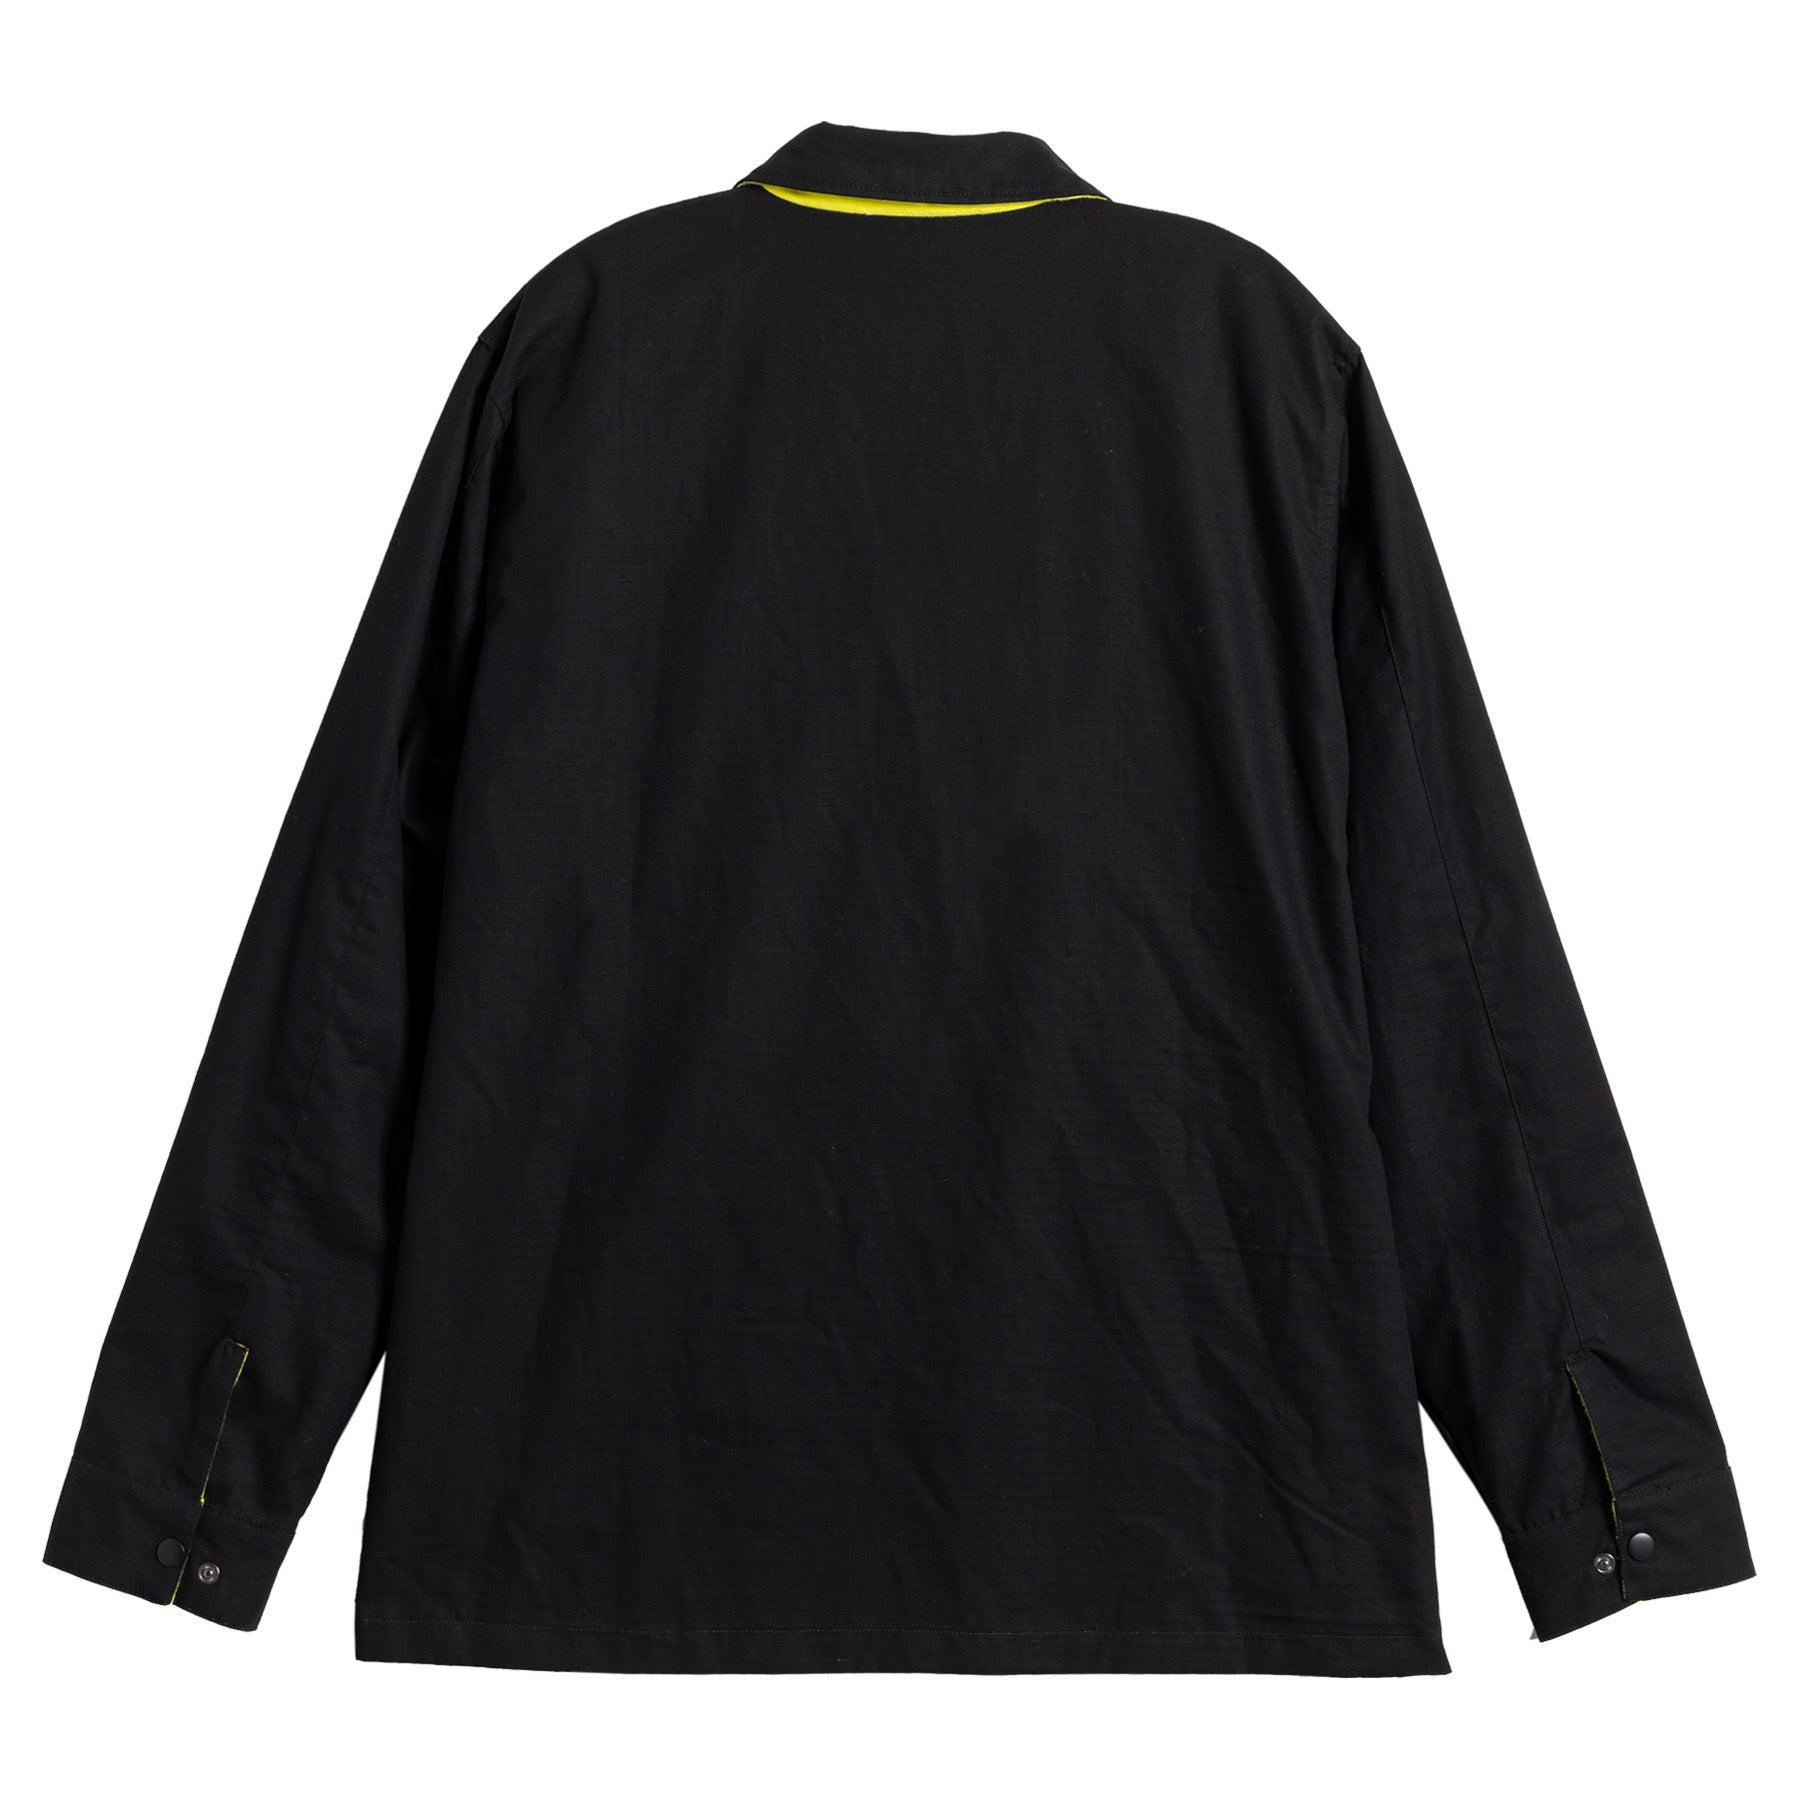 Grm Reversible Jacket - Black/Multi